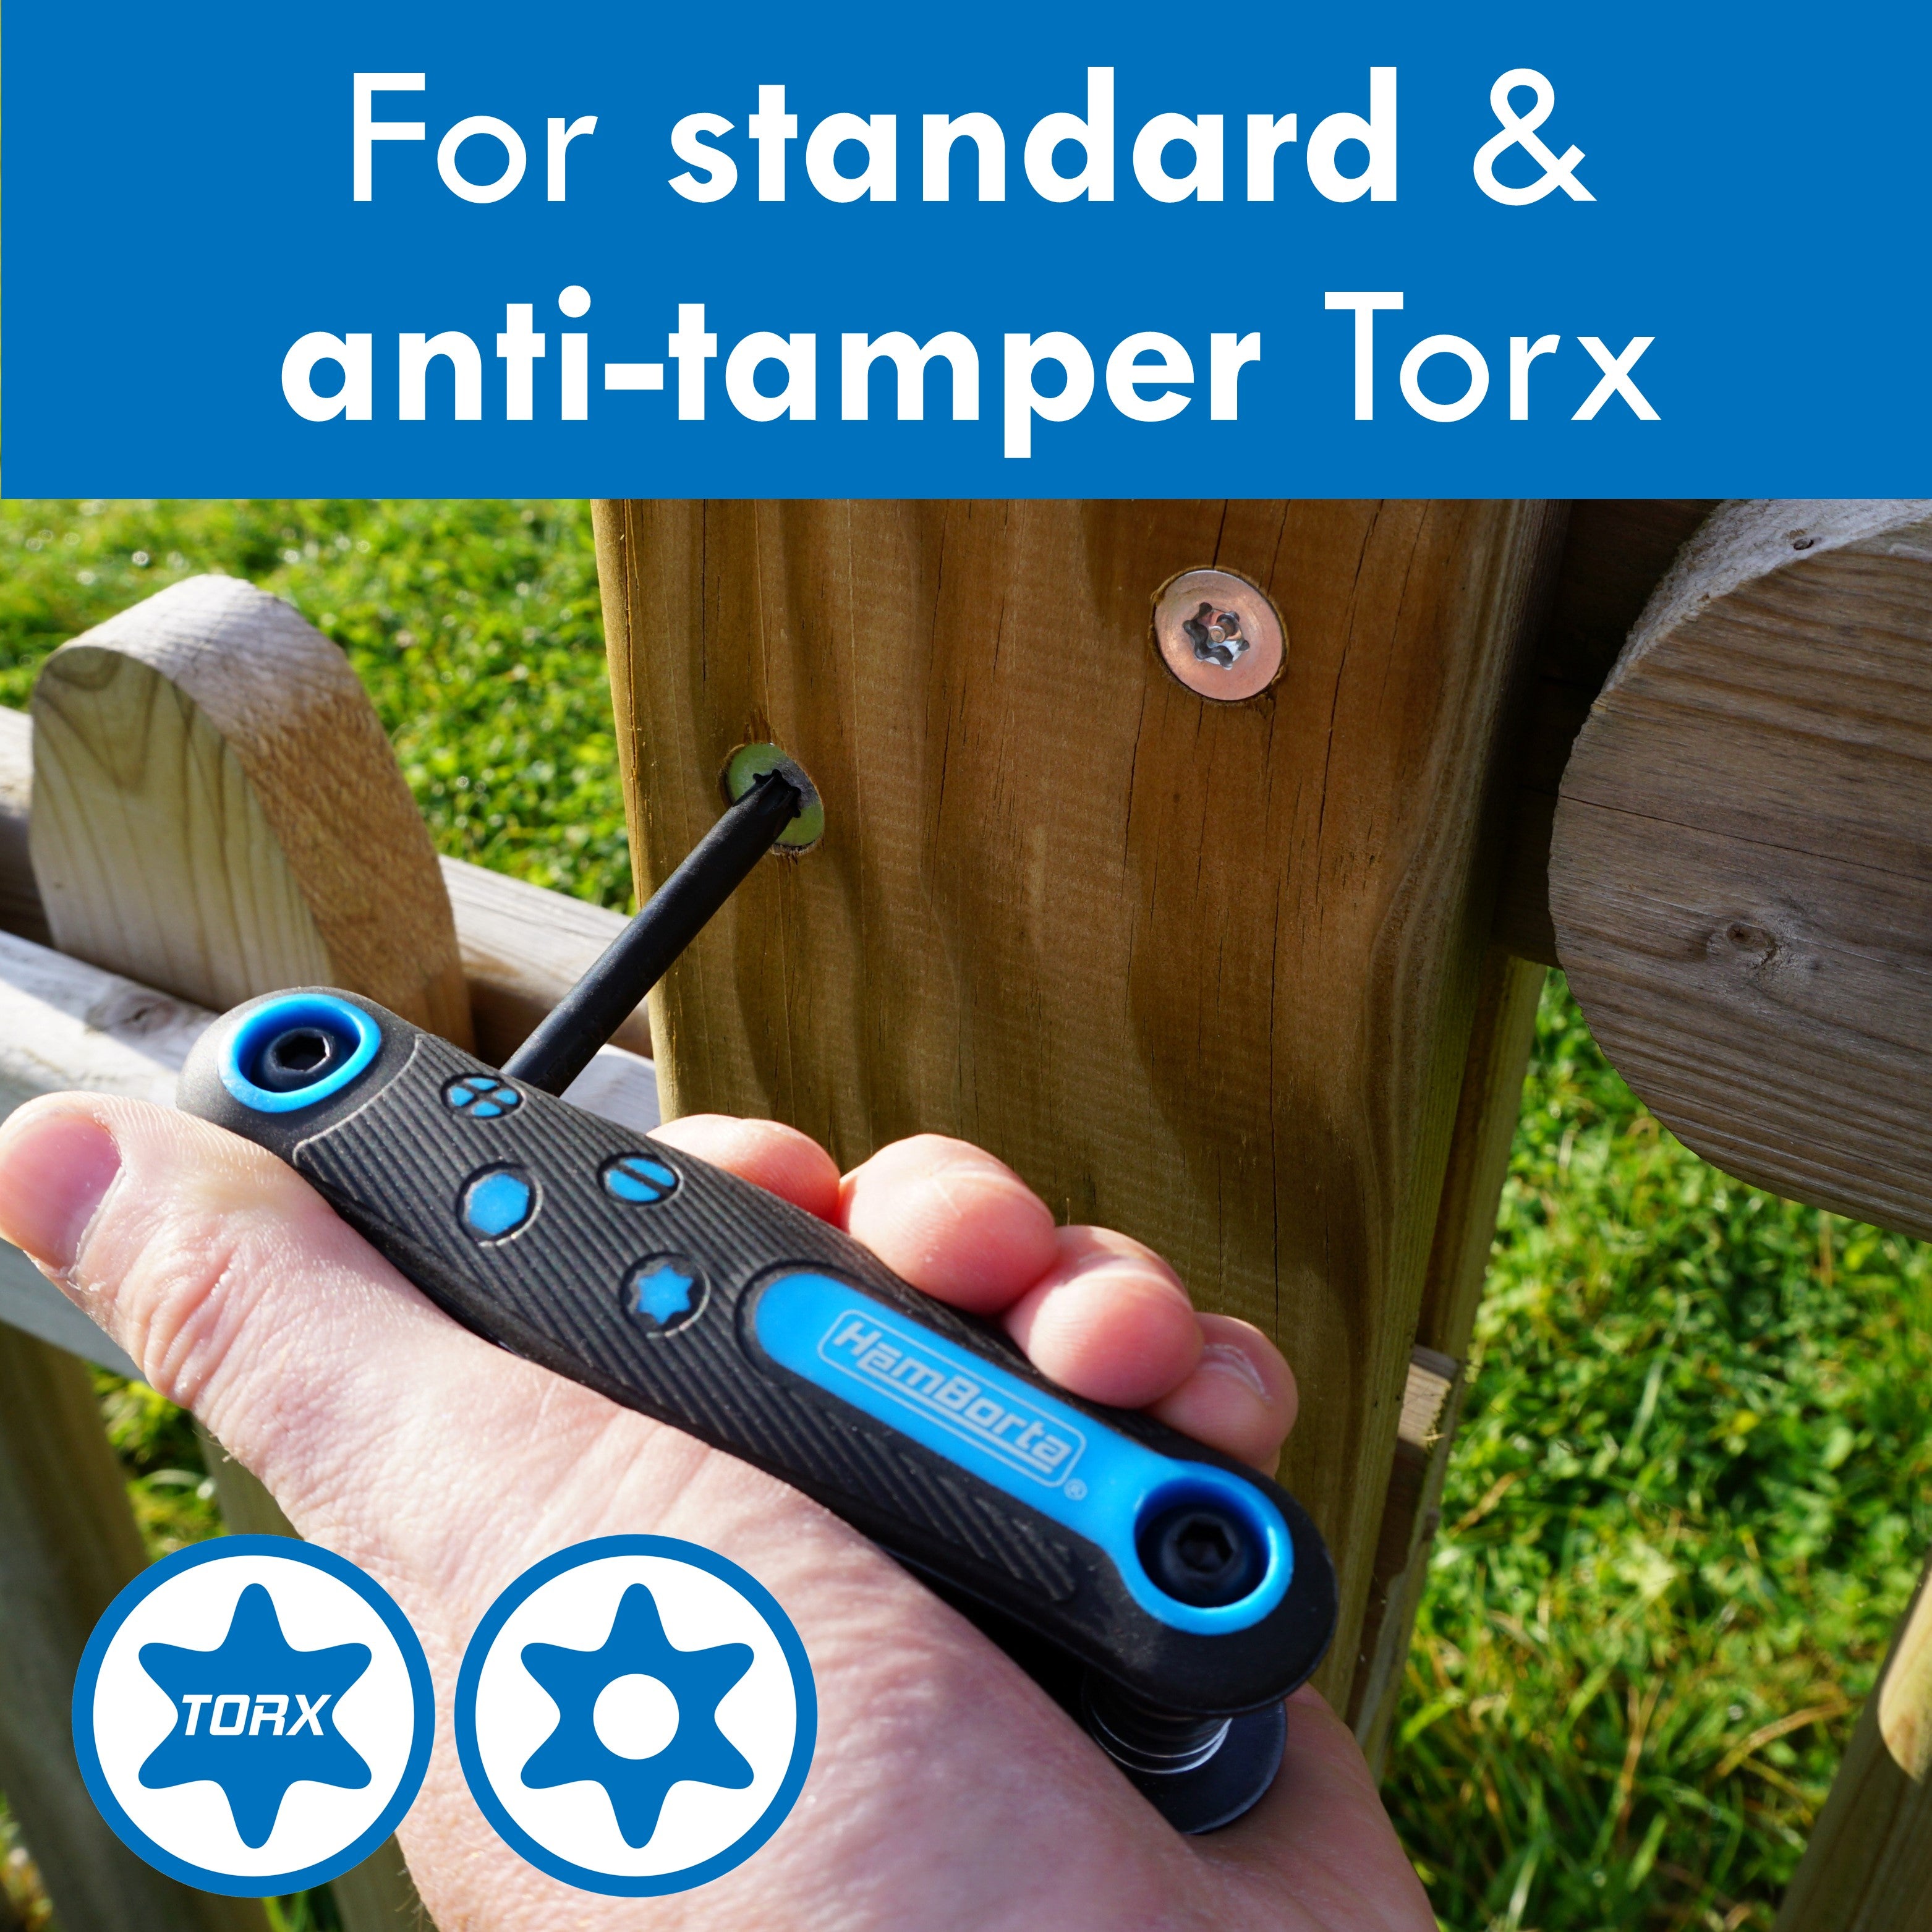 Folding Torx Key Set for standard and anti tamper Torx screws